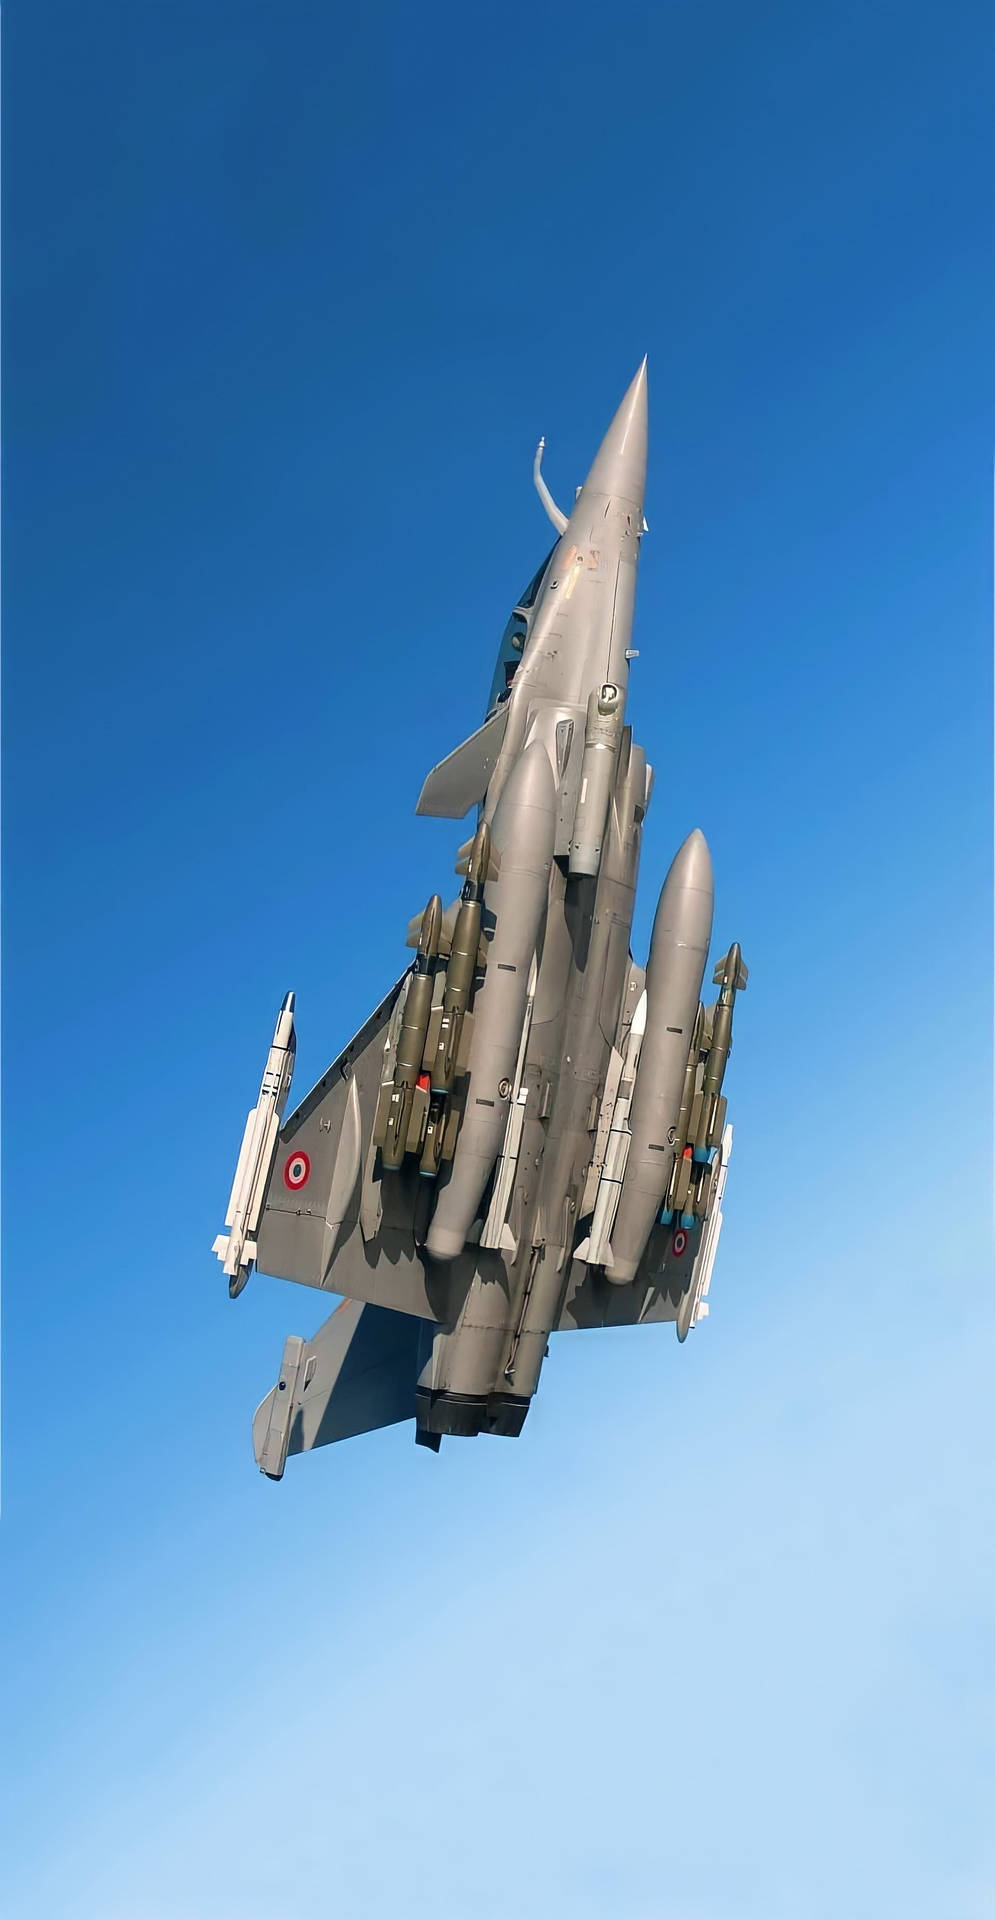 Jet Fighter Wallpaper